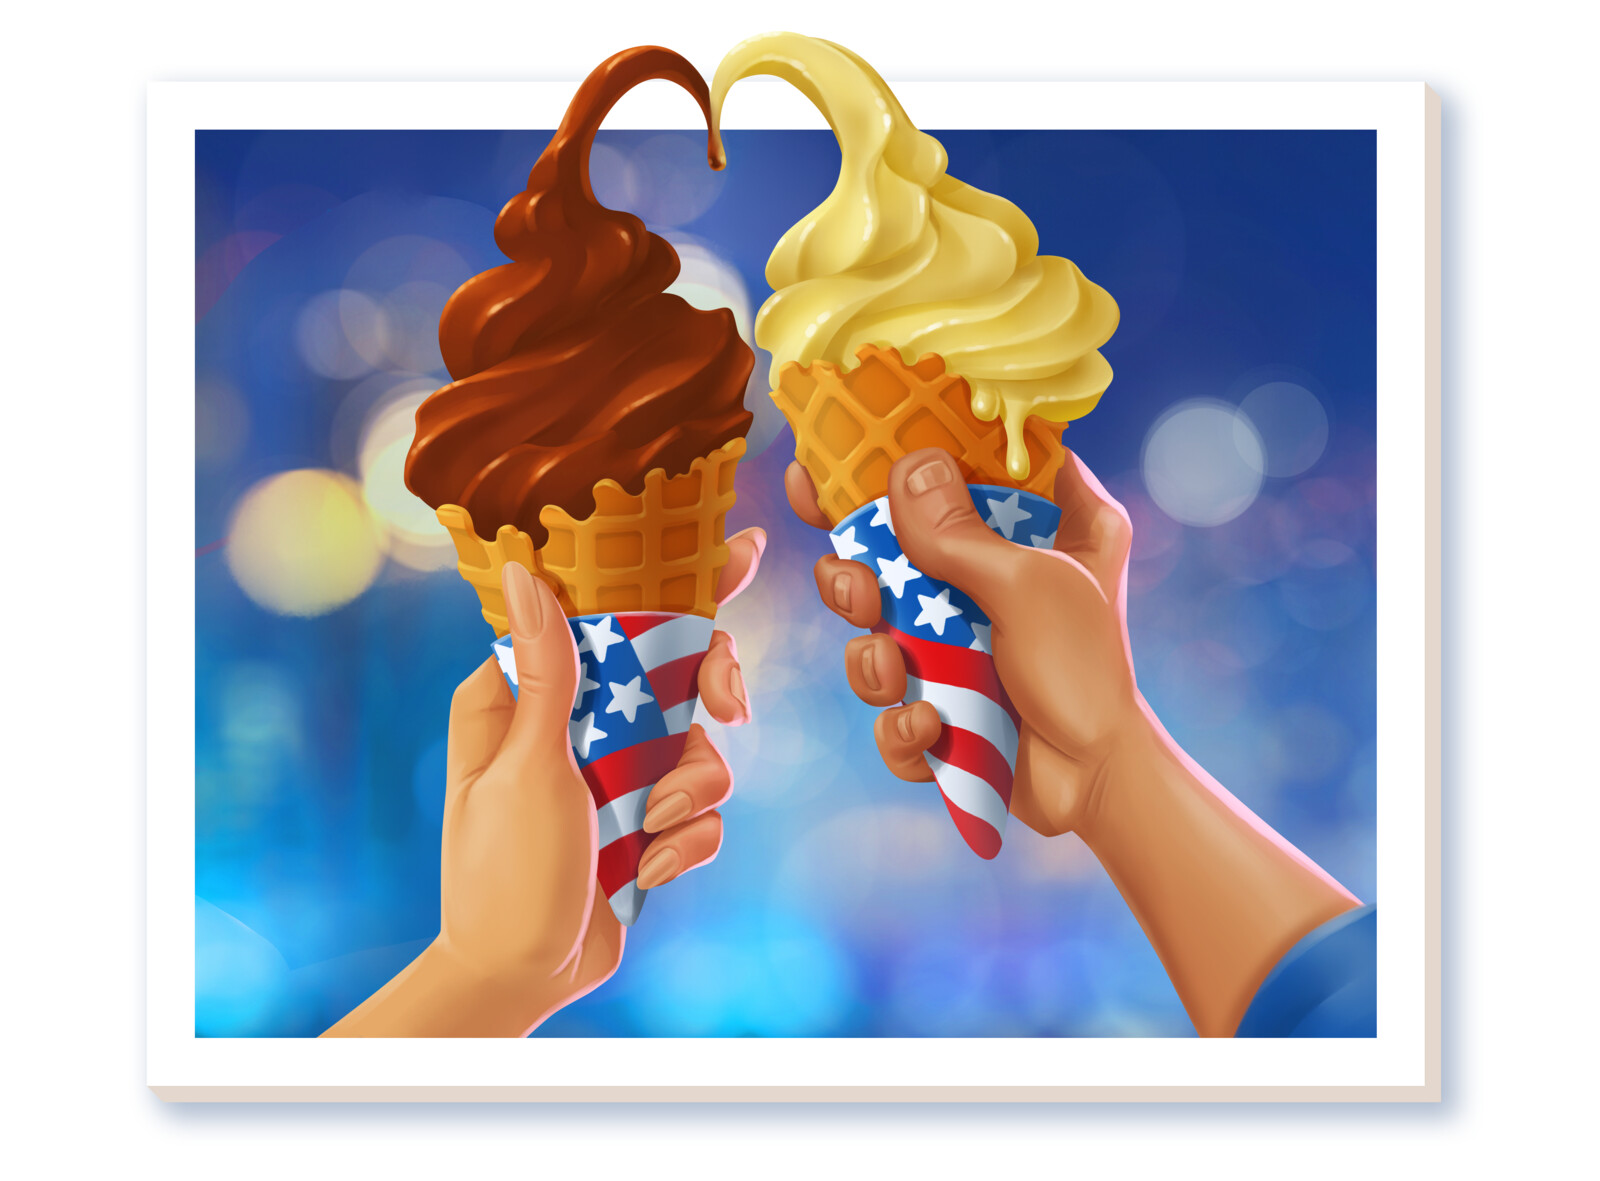 American Ice Cream